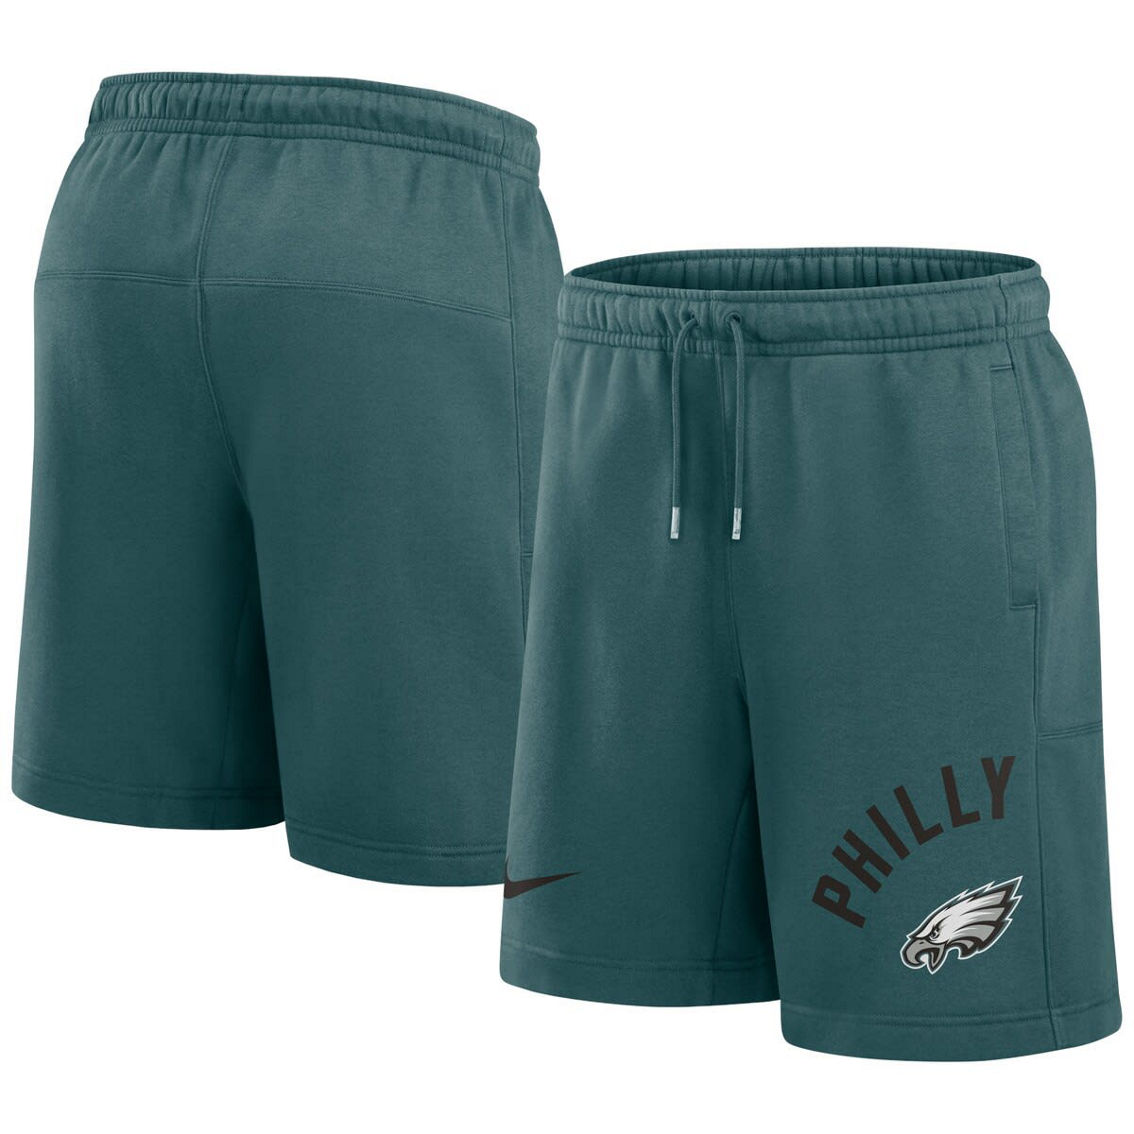 Nike Men's Midnight Green Philadelphia Eagles Arched Kicker Shorts - Image 2 of 4